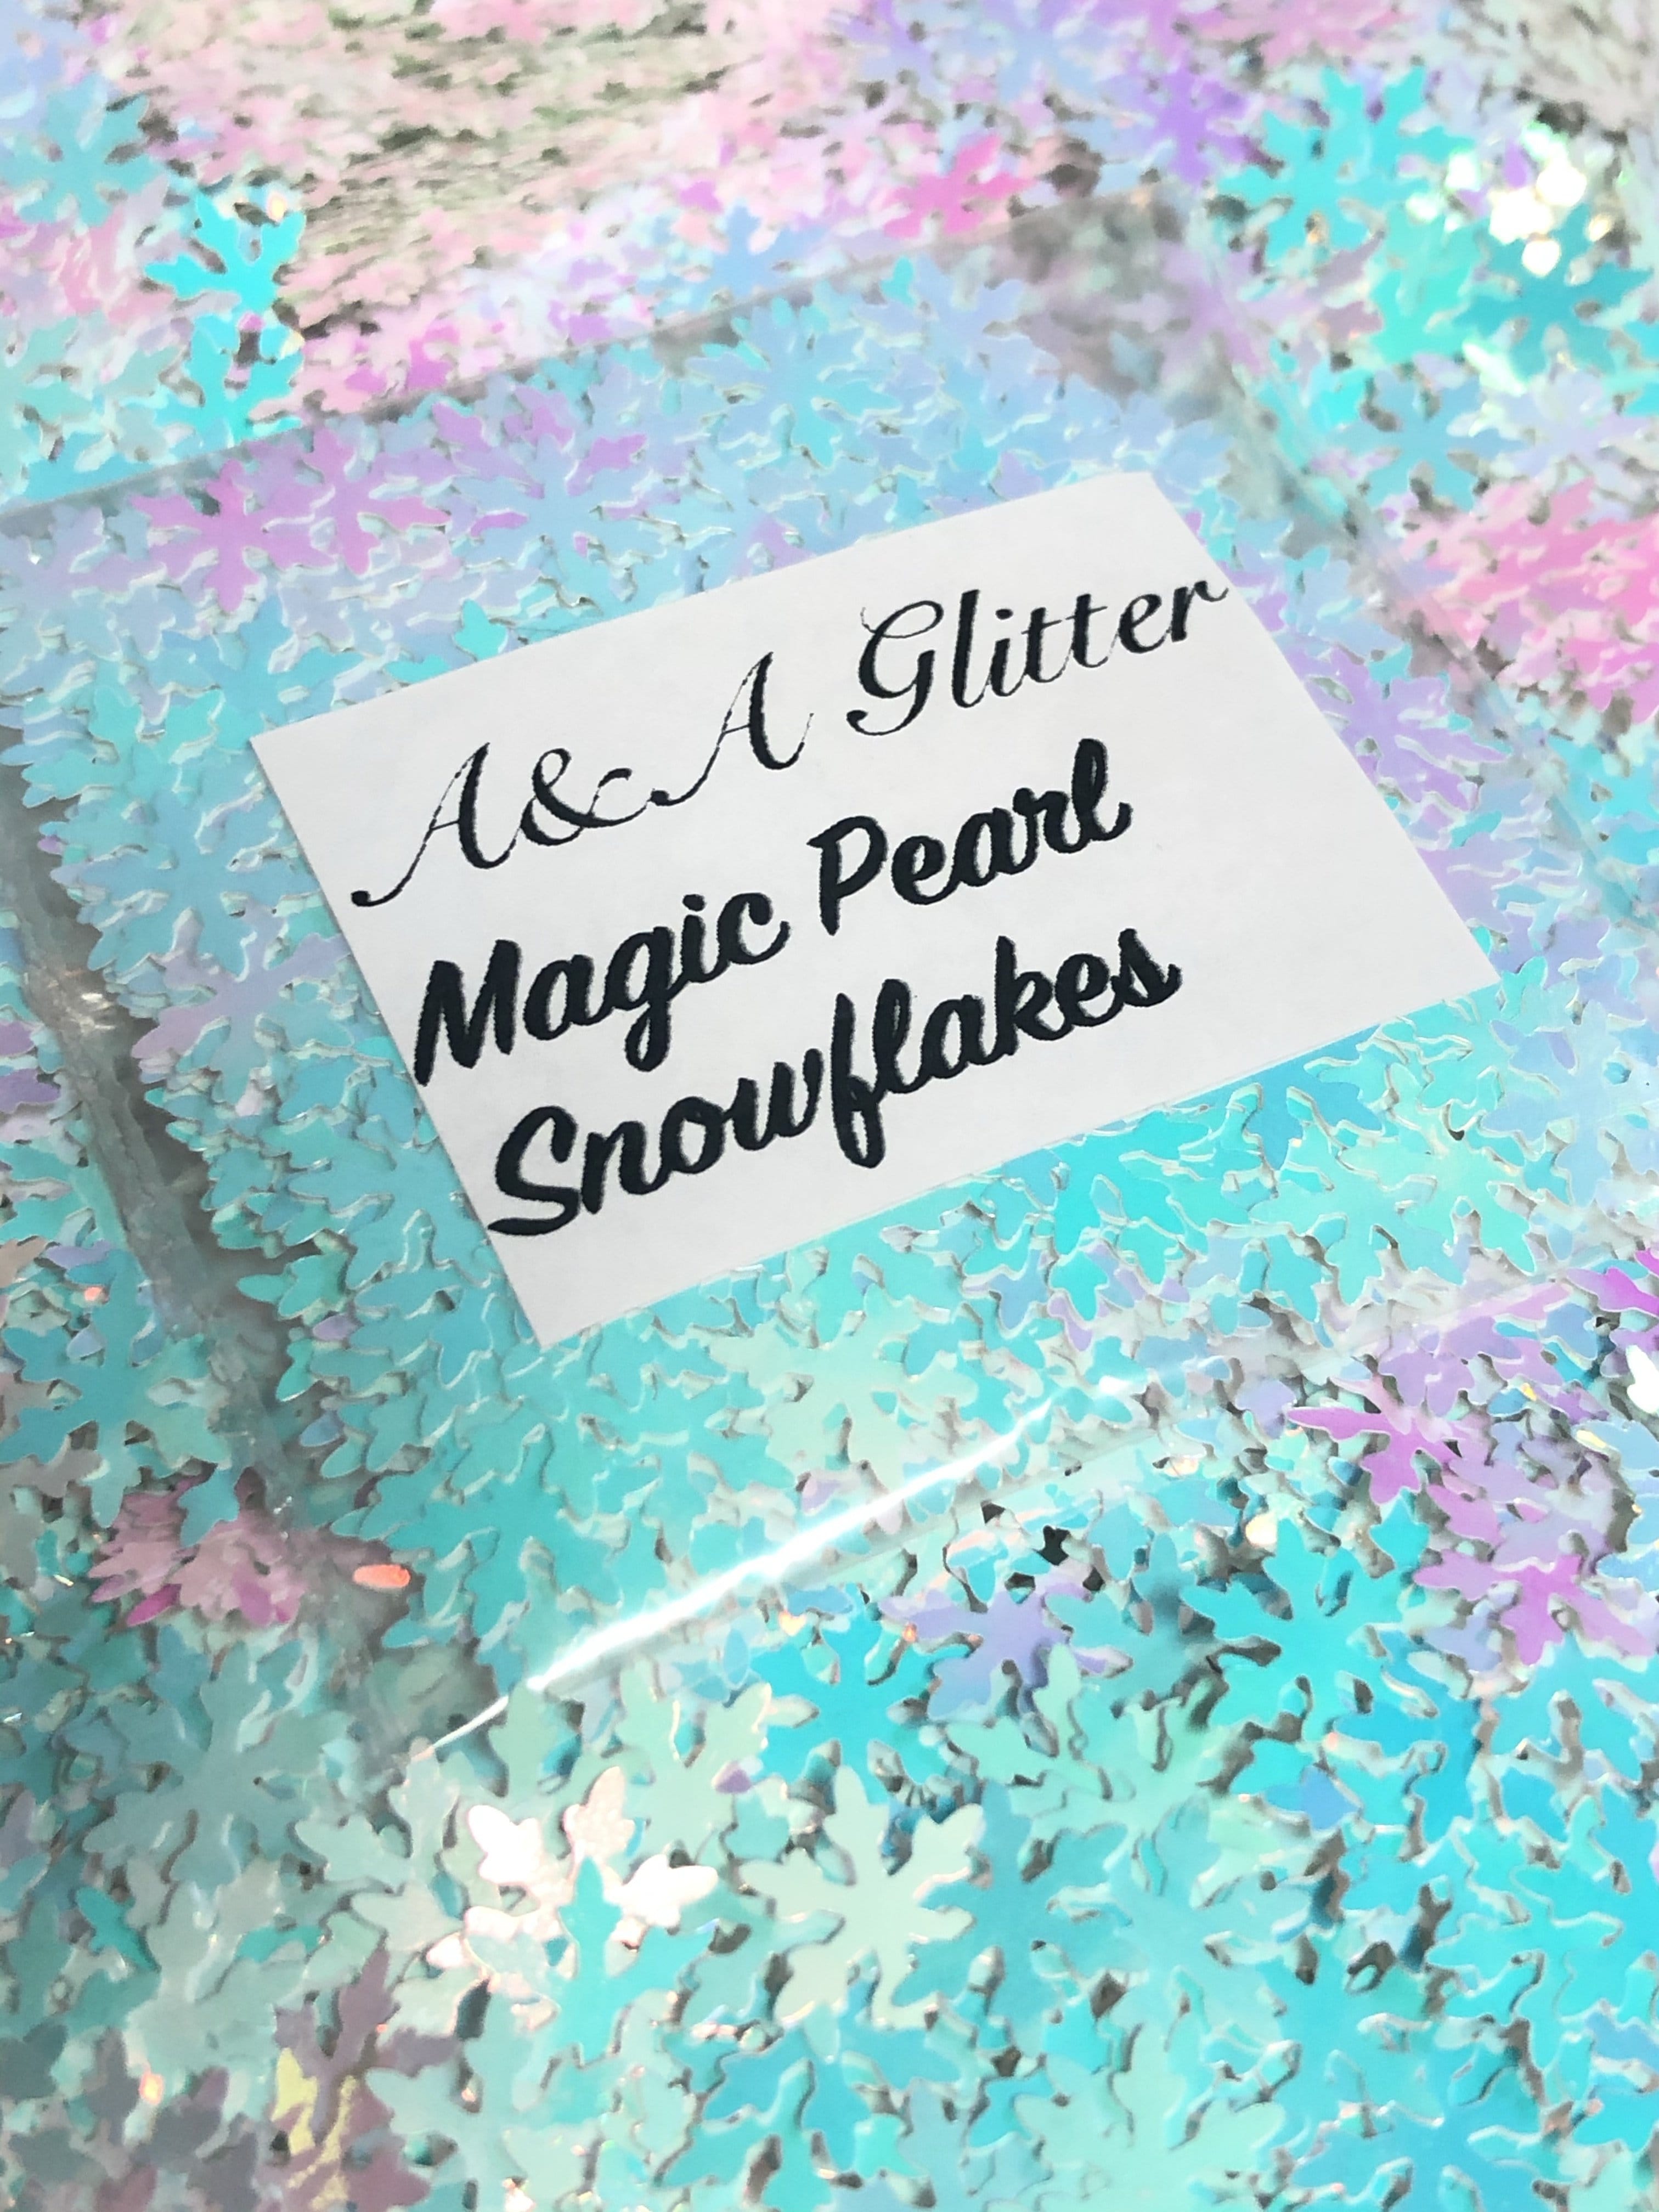 Magic Pearl - Snowflakes